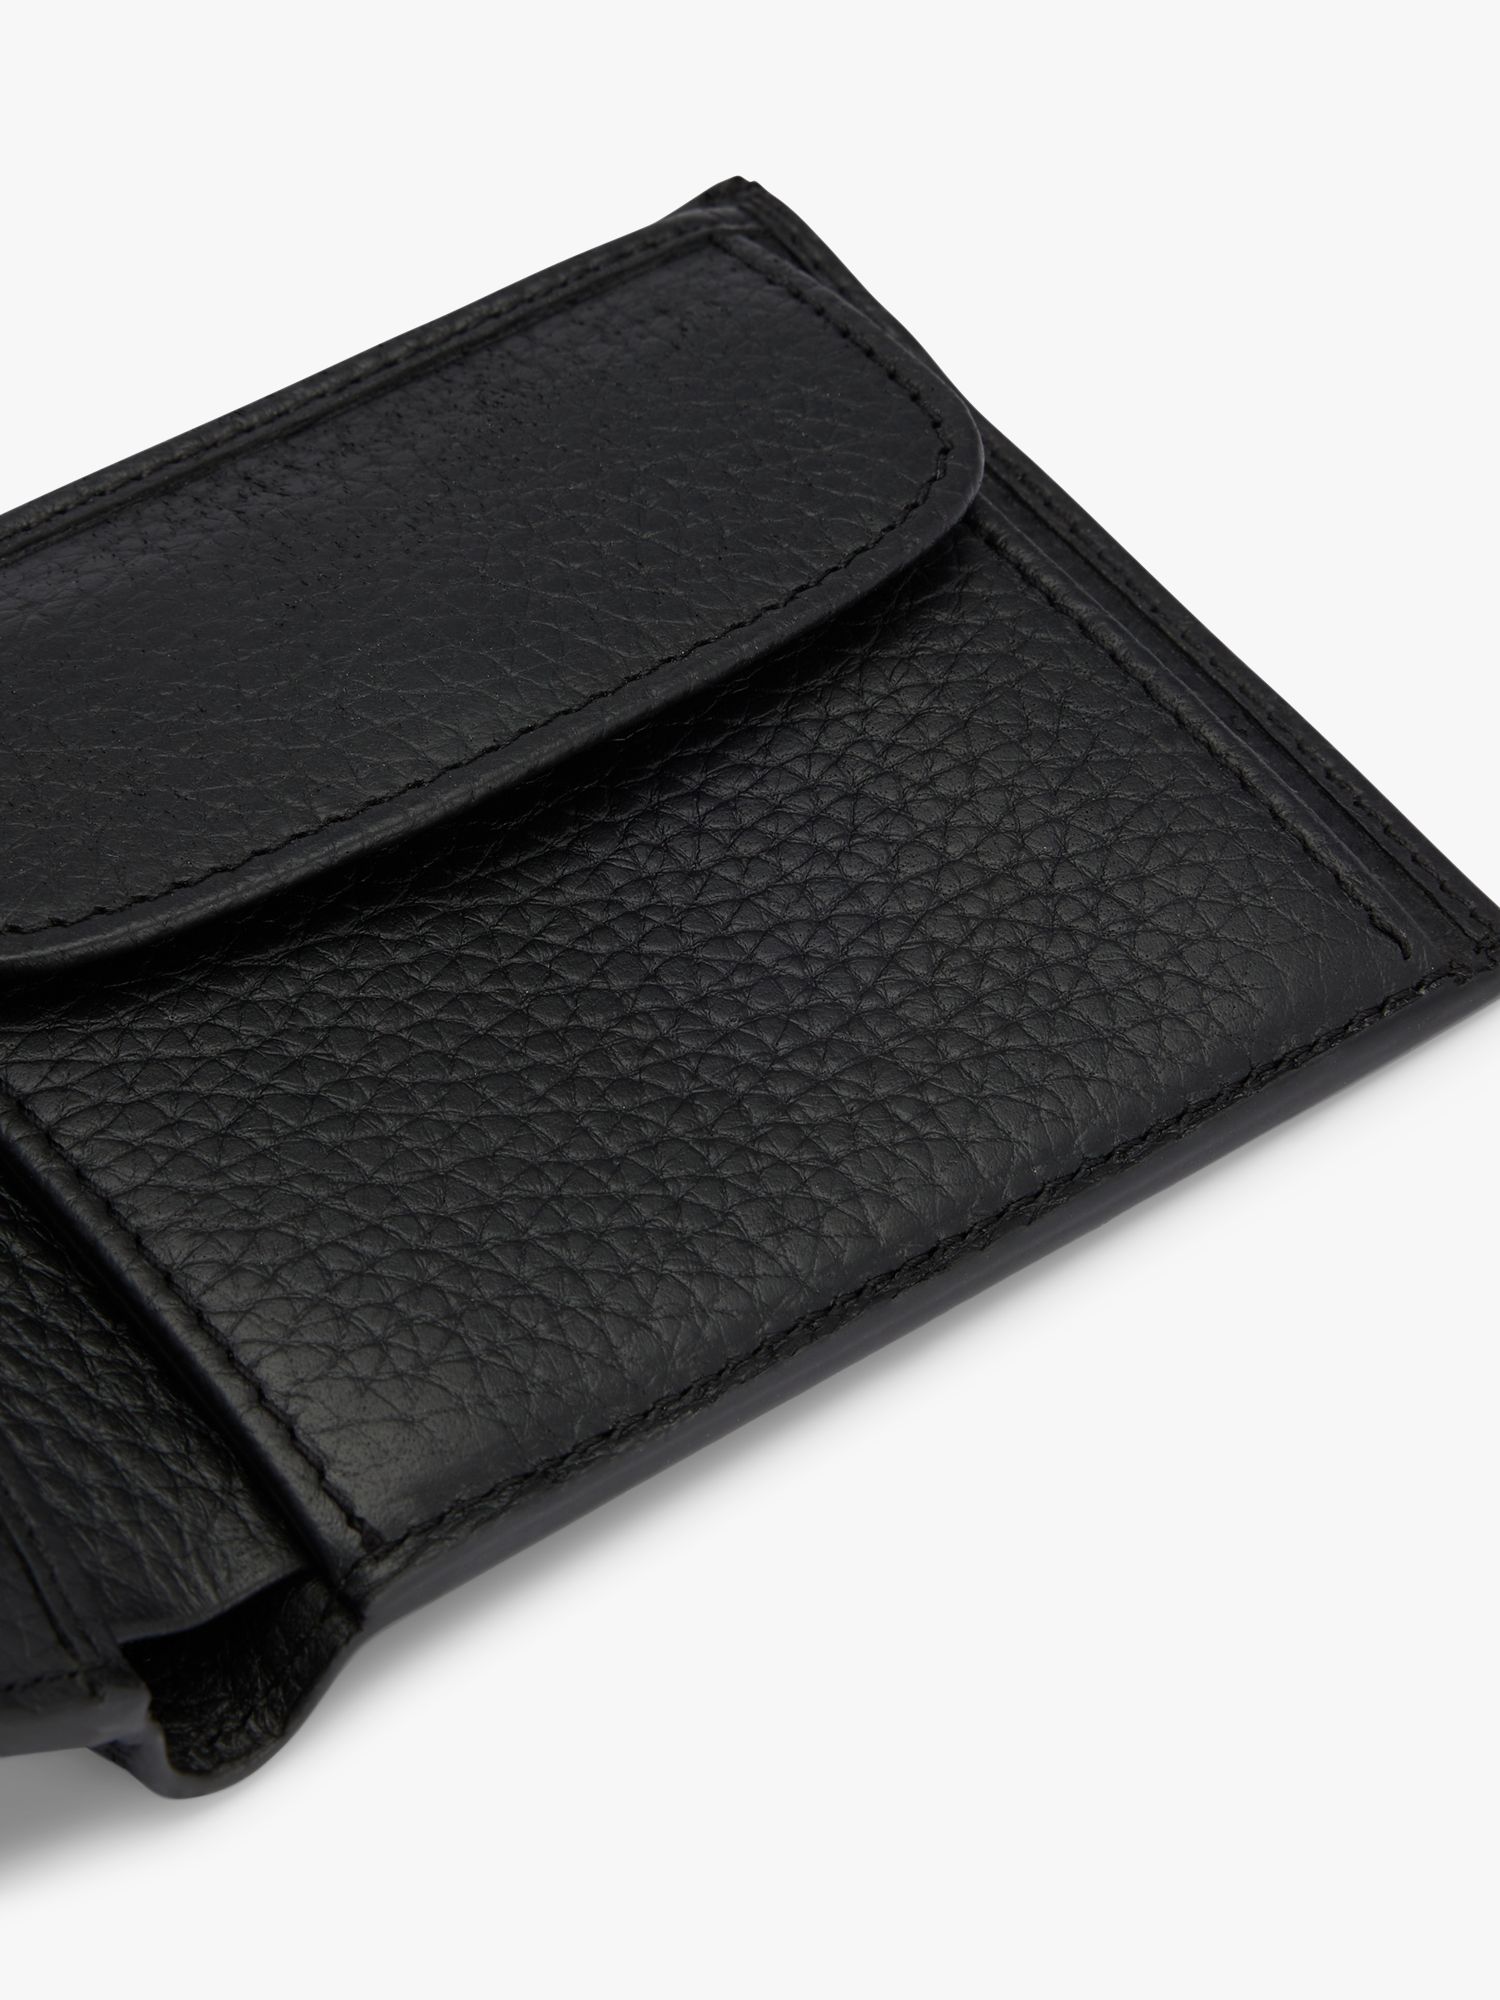 BOSS Crosstown 4 Card Slots Leather Wallet, Black, One Size